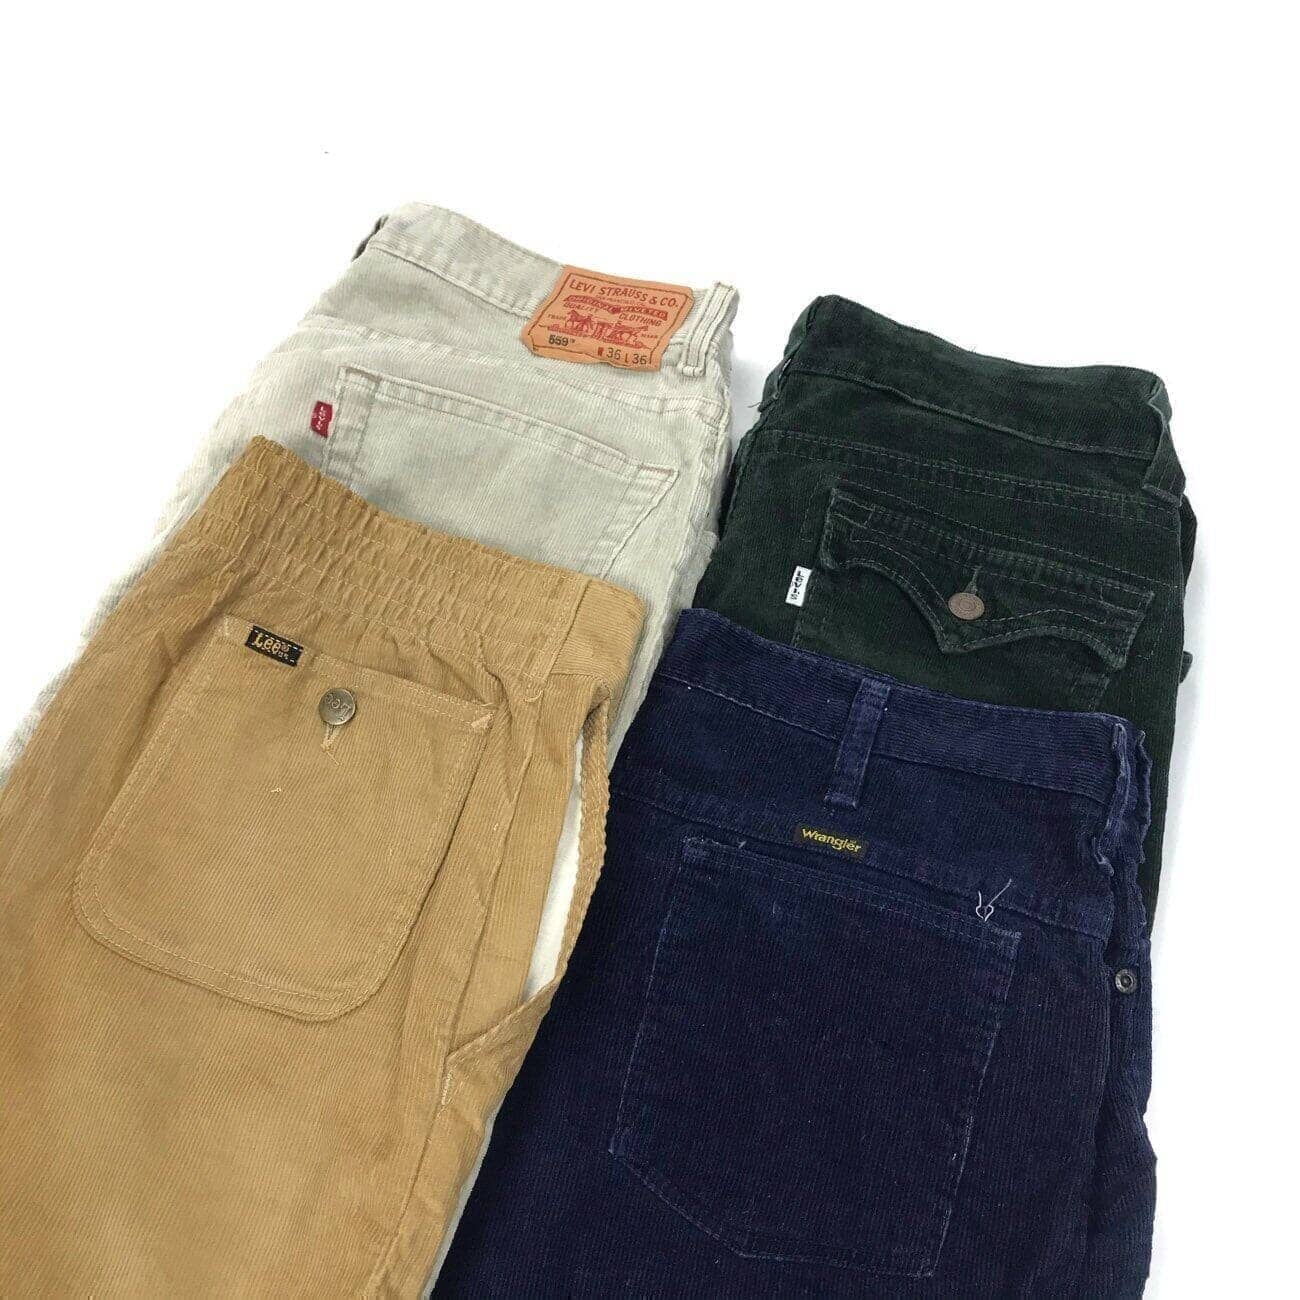 Branded Corduroy Jeans Northern Pole Vintage Wholesale 